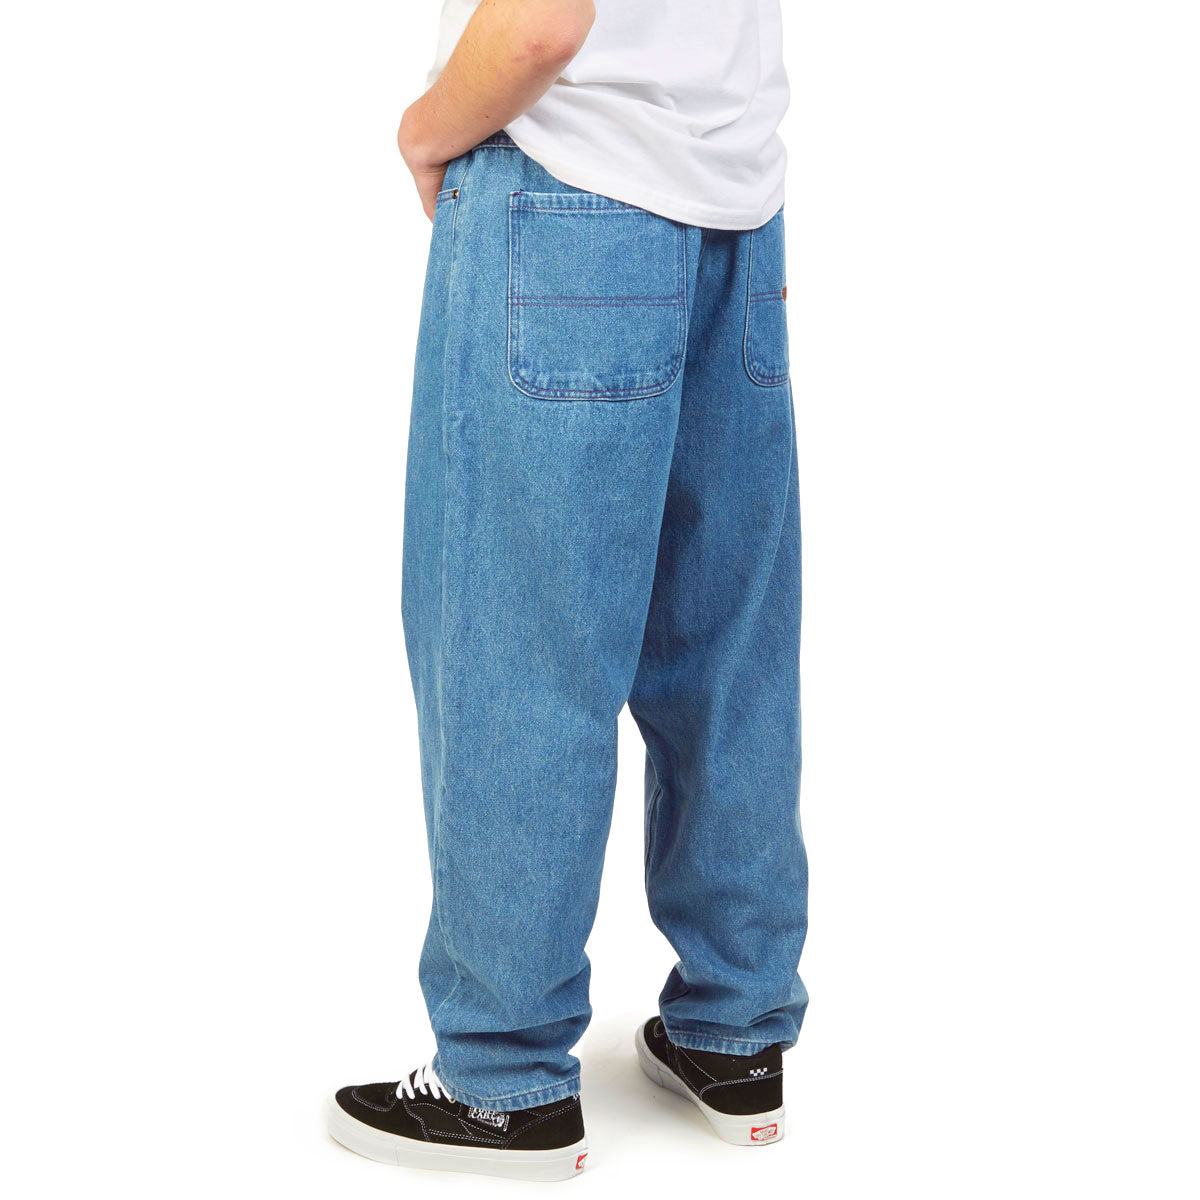 CCS Baggy Taper Denim Jeans - Medium Wash image 3